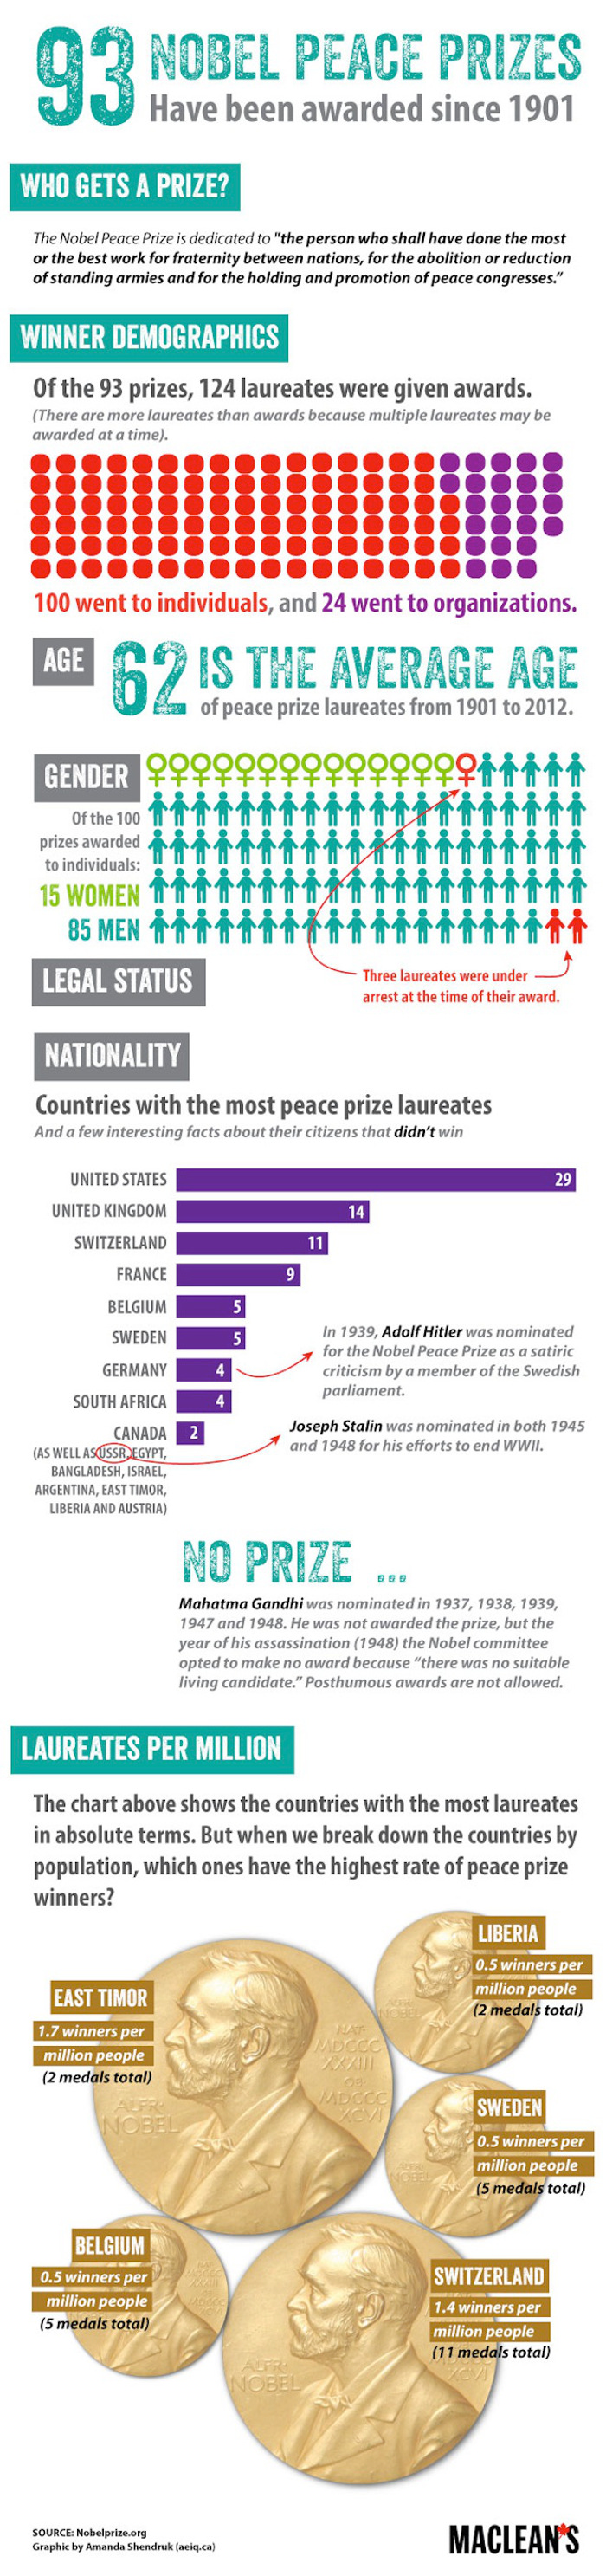 Nobel Peace Prizes